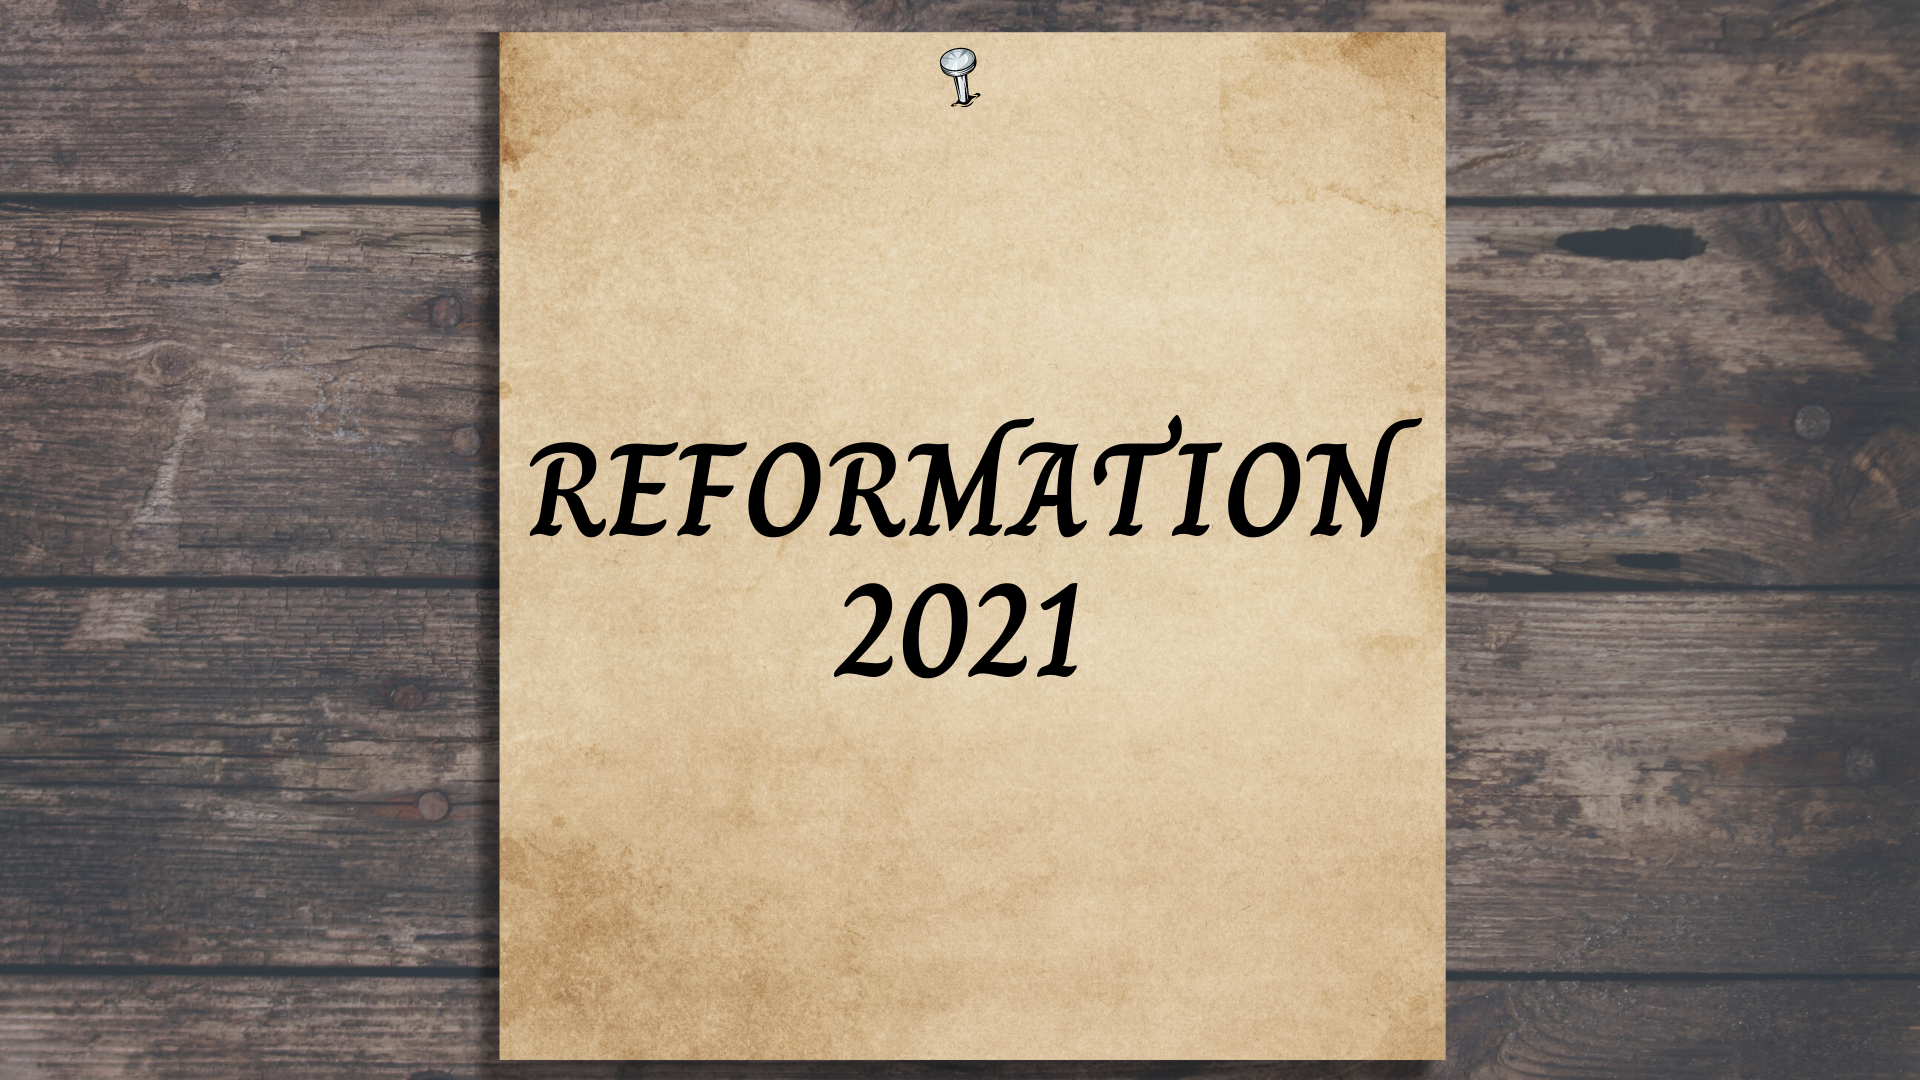 Reformation 2021 banner